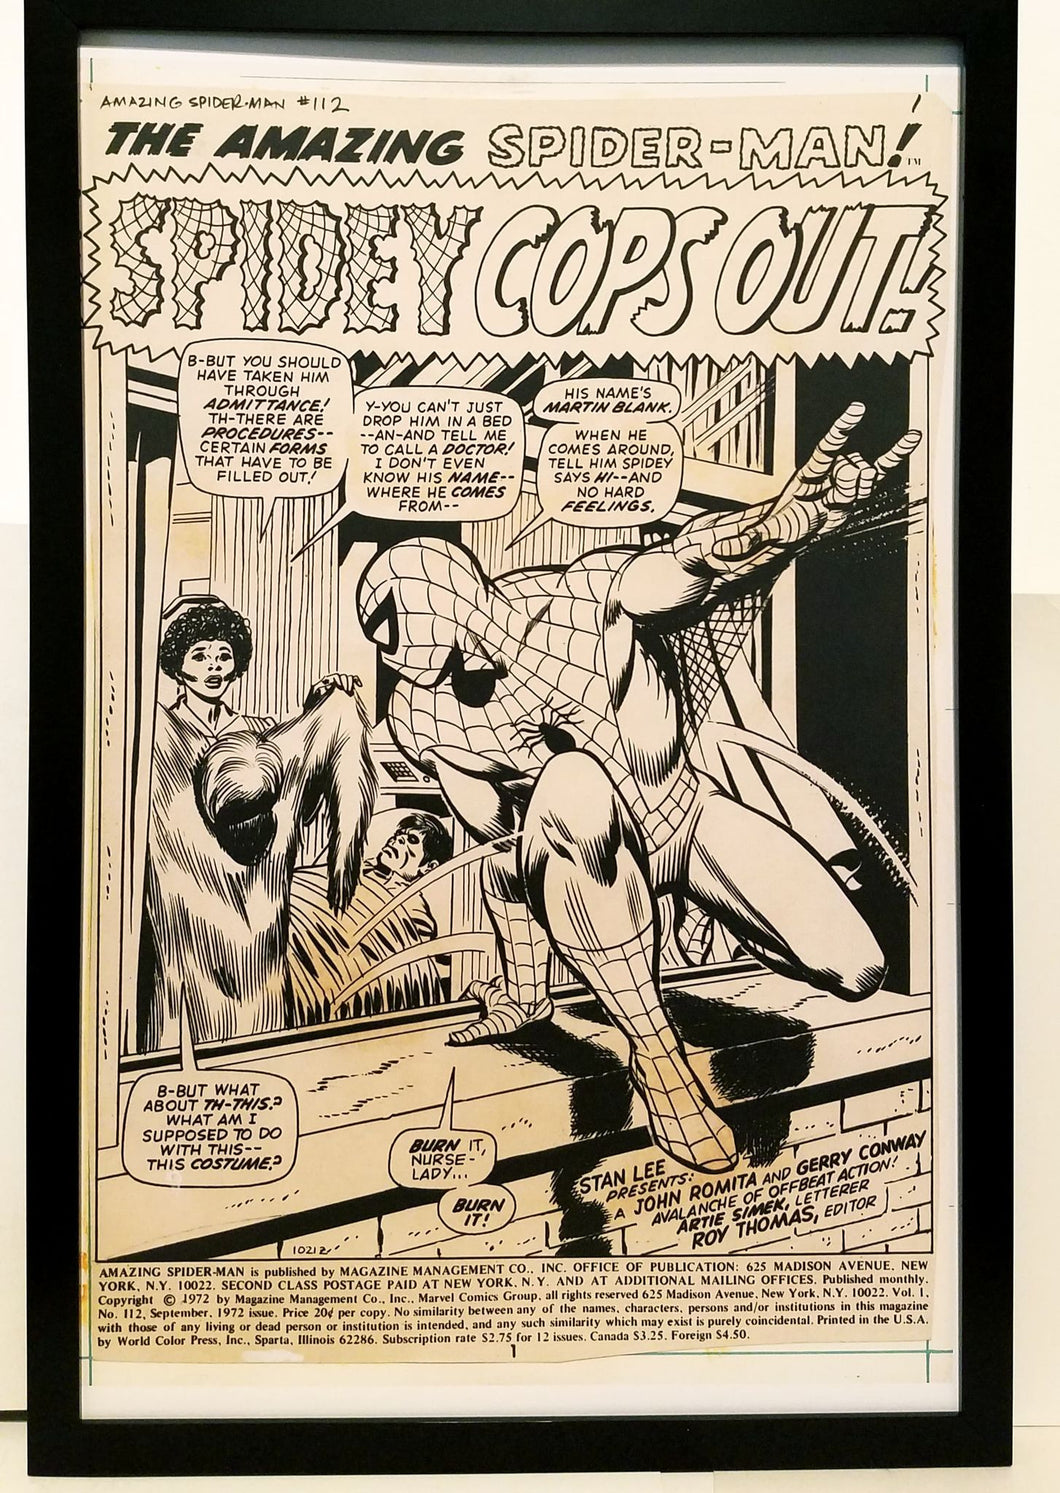 Amazing Spider-Man #112 pg. 1 John Romita 11x17 FRAMED Original Art Poster Marvel Comics